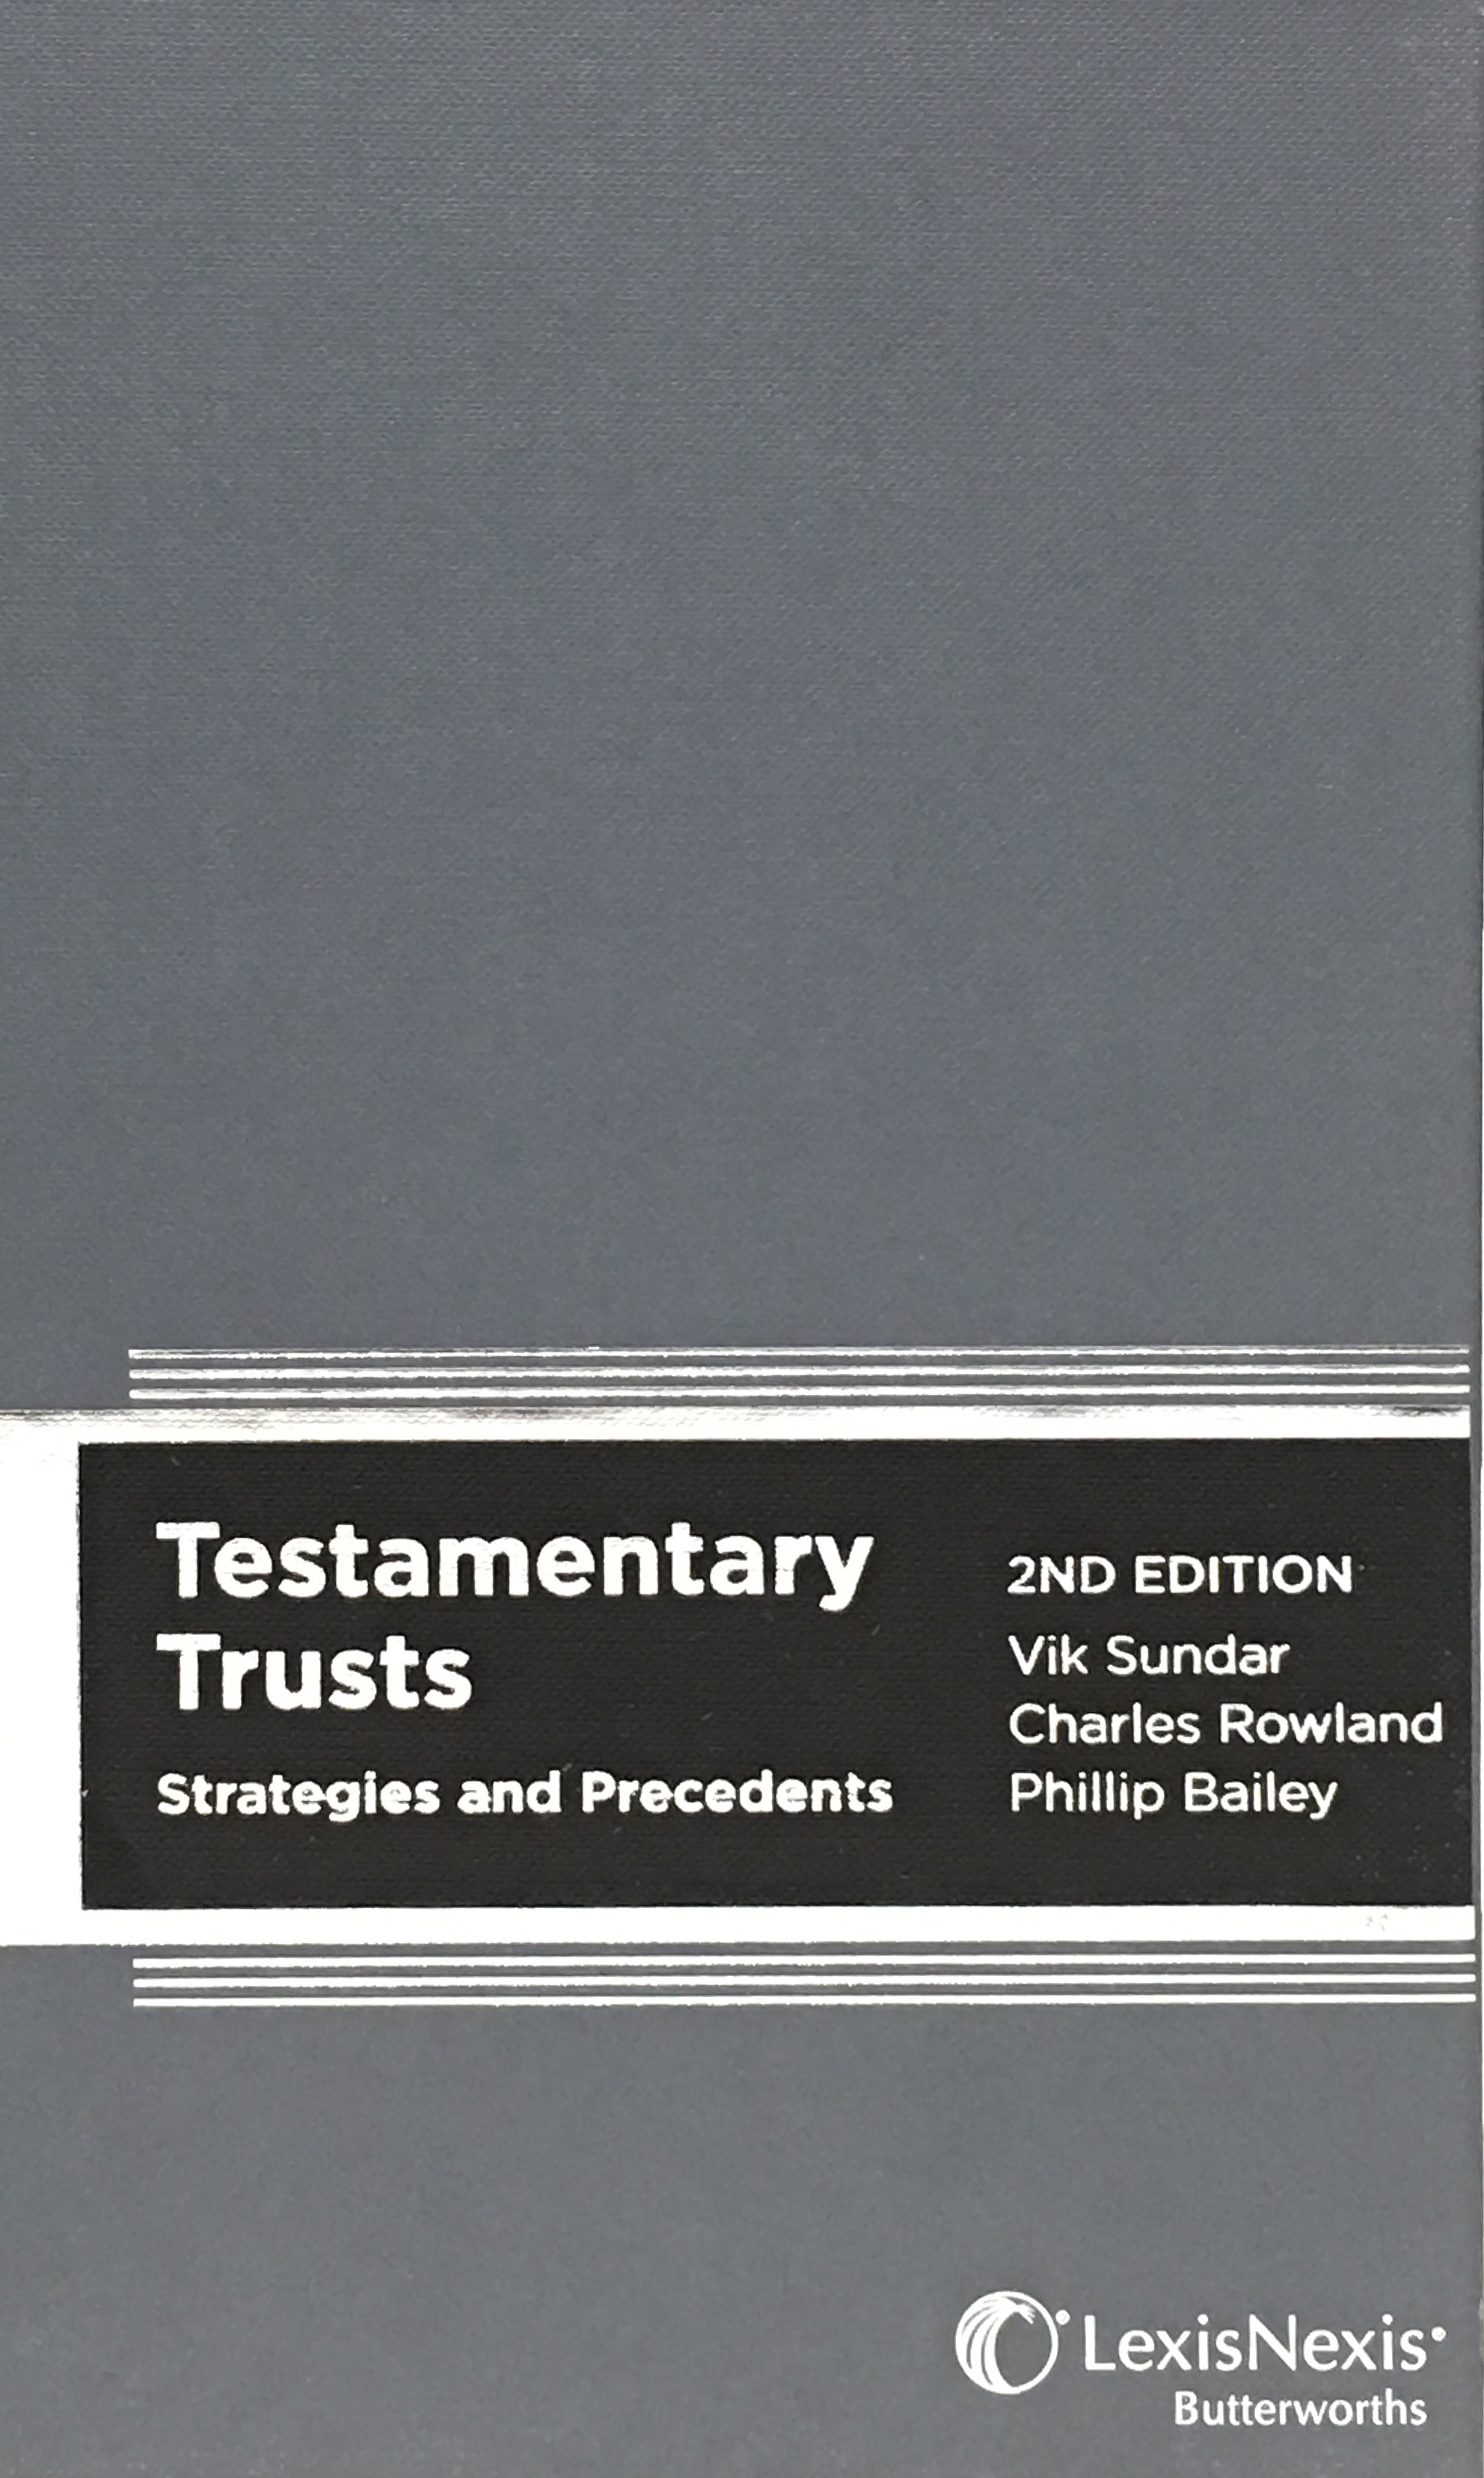 Testamentary Trusts: Strategies and Precedents e2